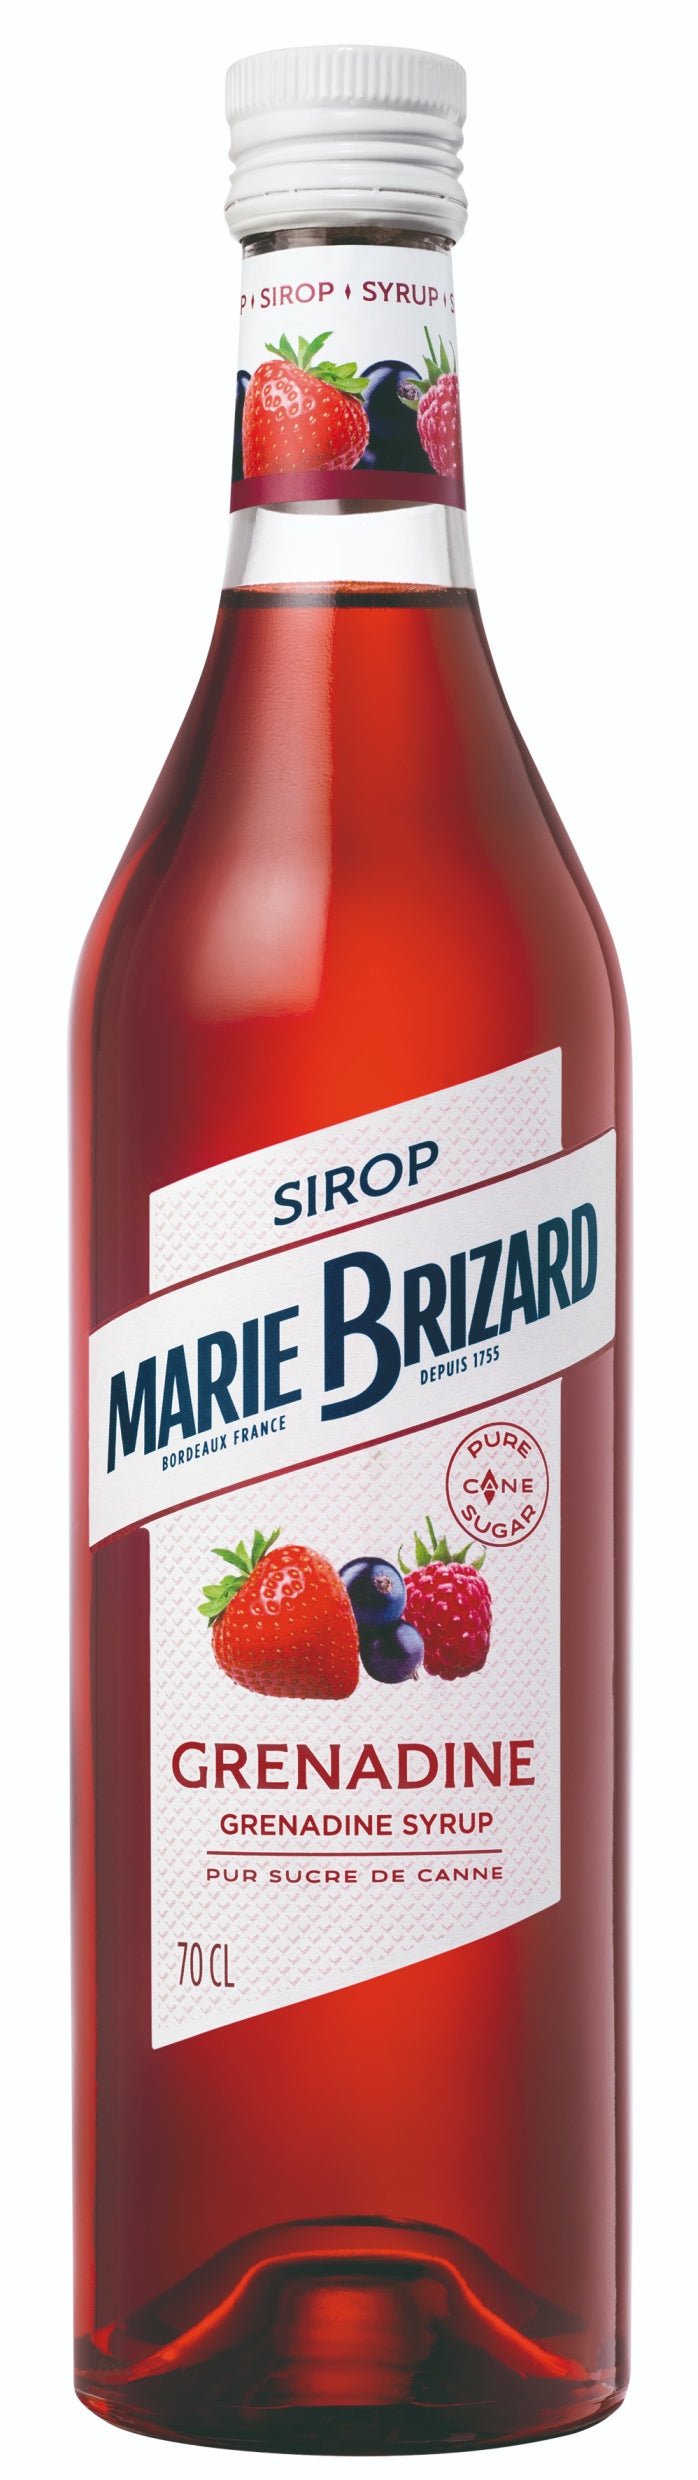 MARIE BRIZARD SIROP GRENADINE 70CL